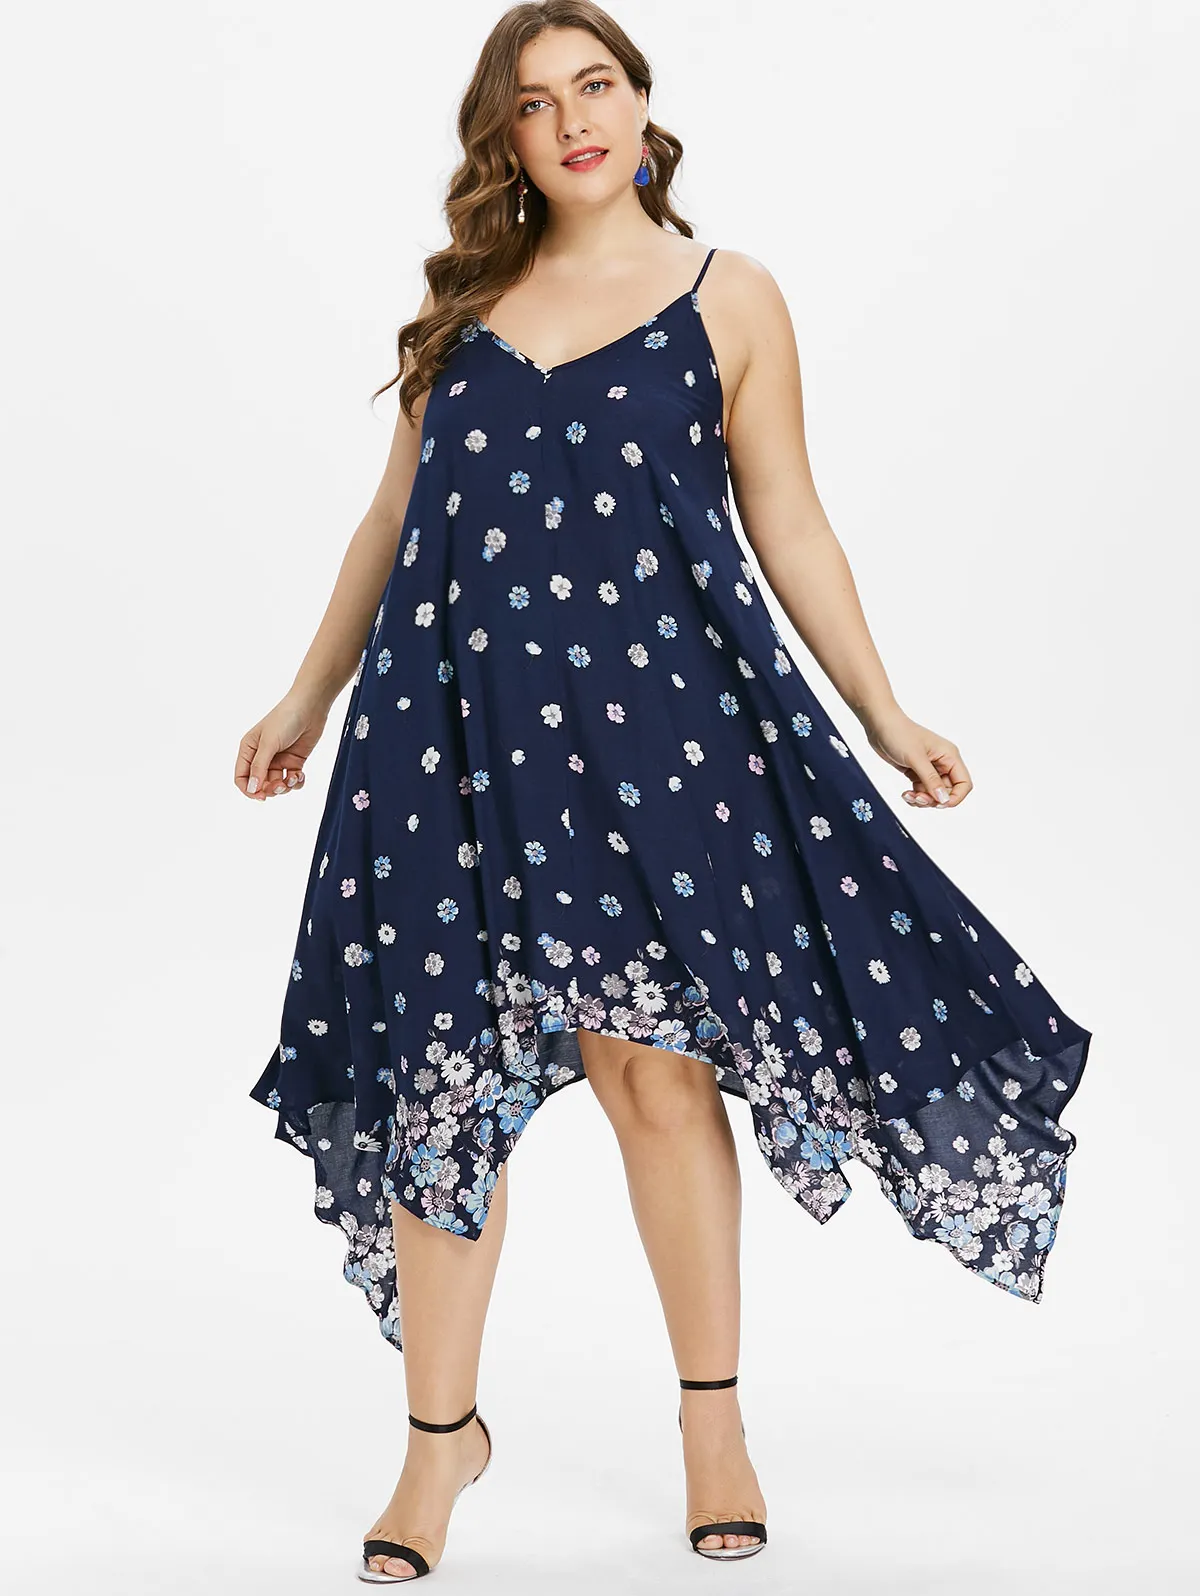 Wipalo Women Summer Plus Size 5XL Tiny Floral Handkerchief Slip Dress ...